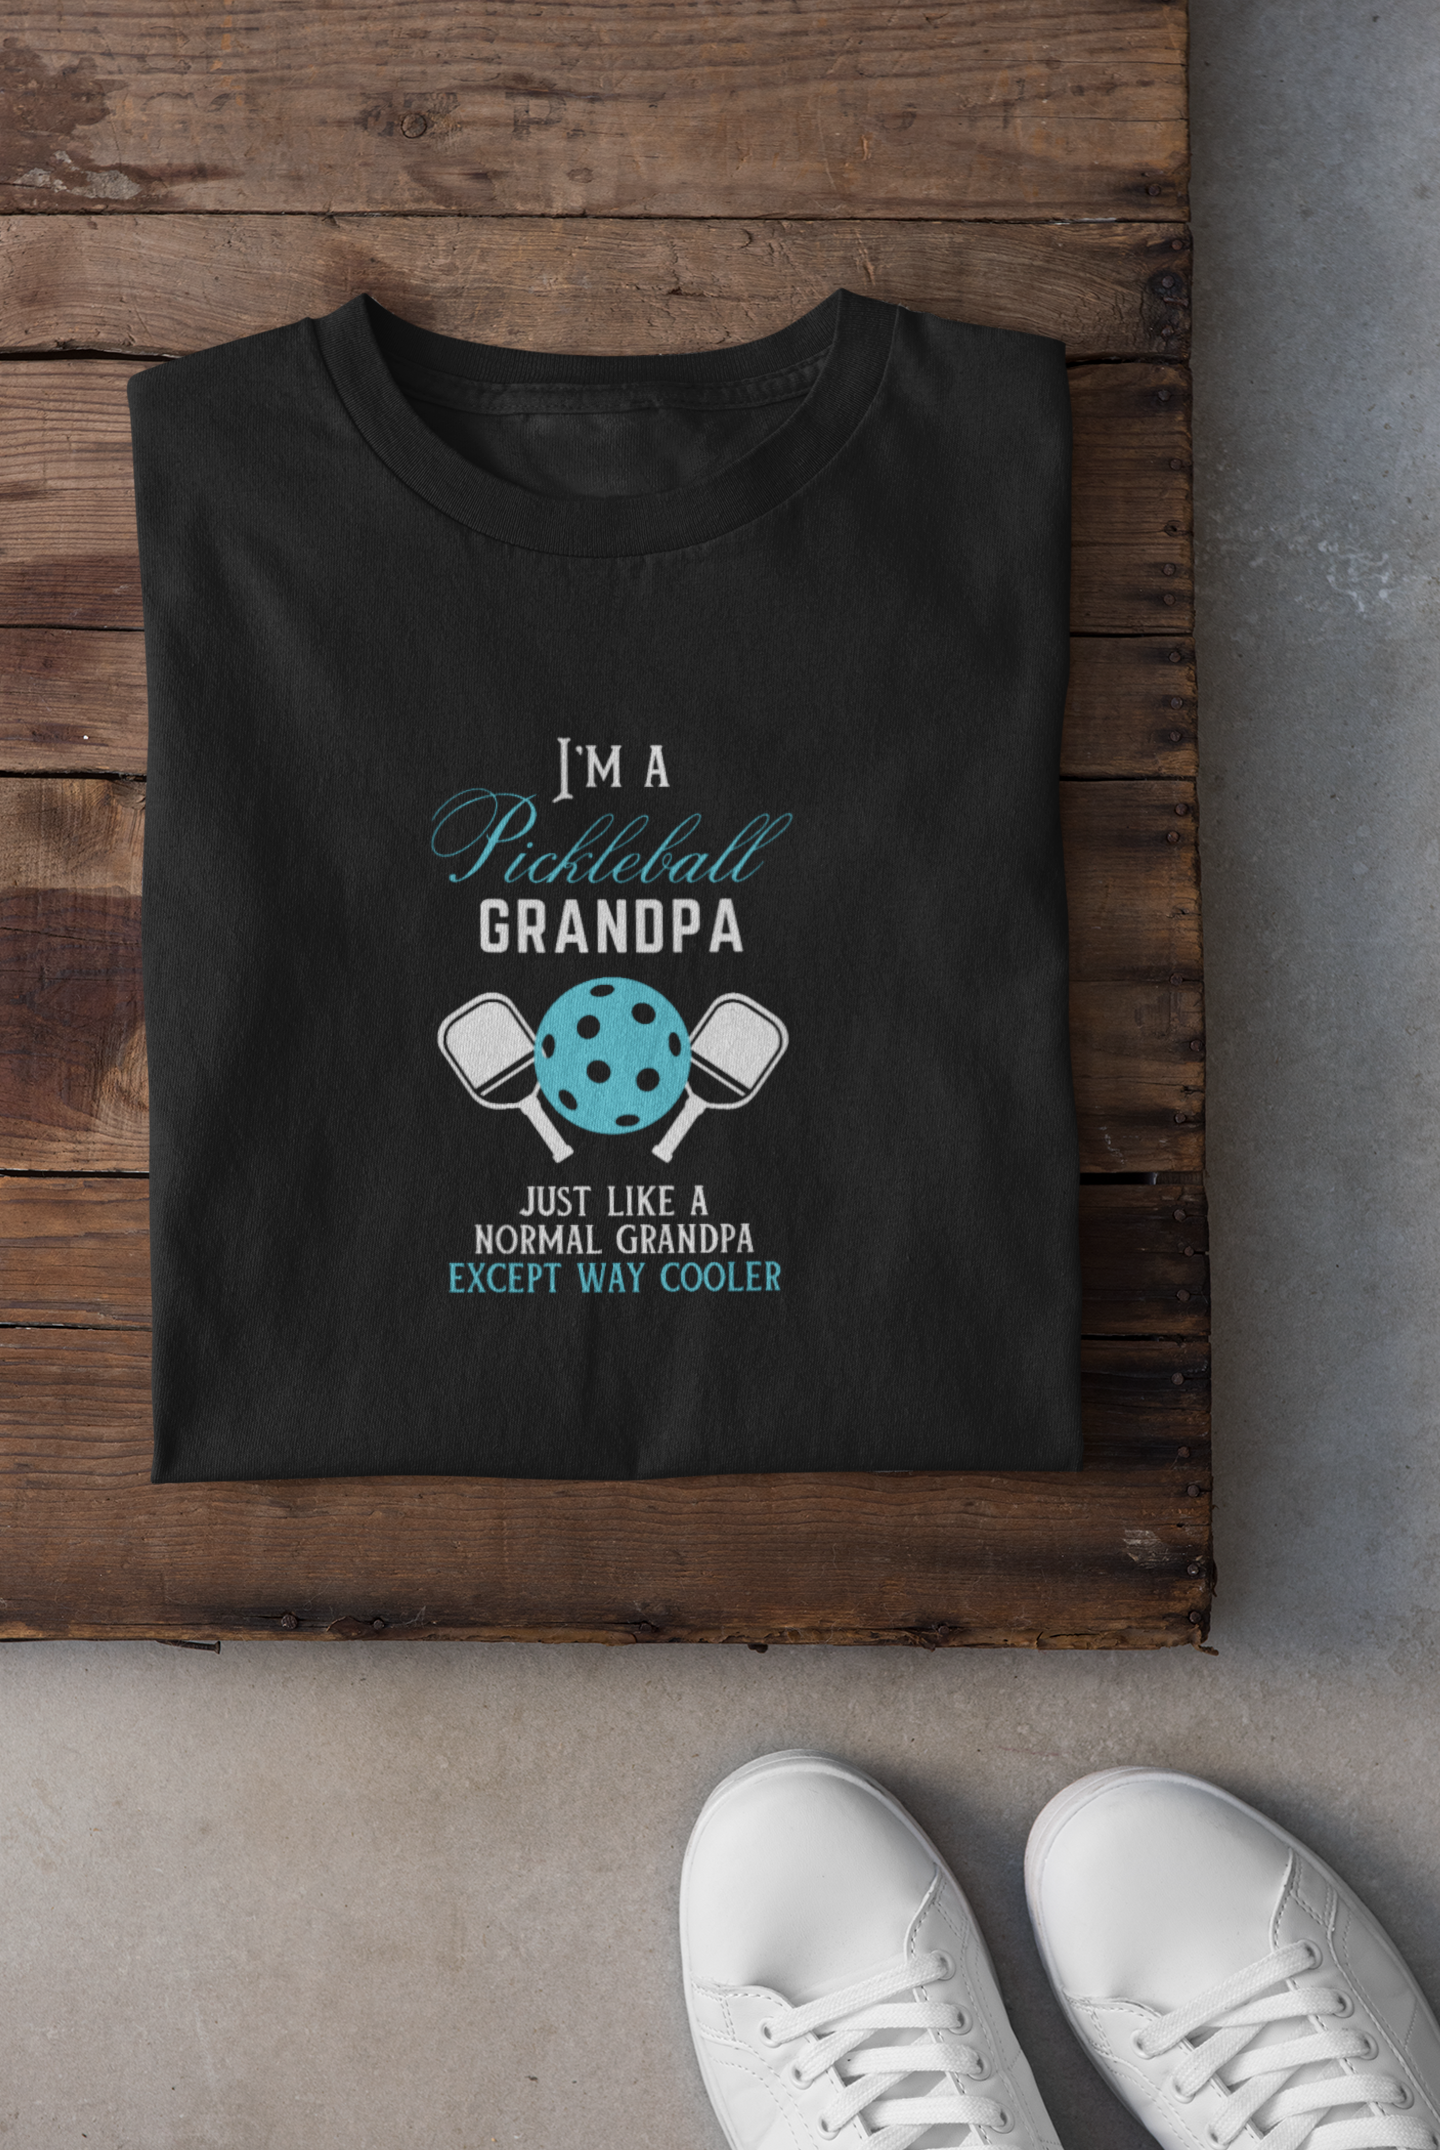 I'm a Pickleball Grandpa